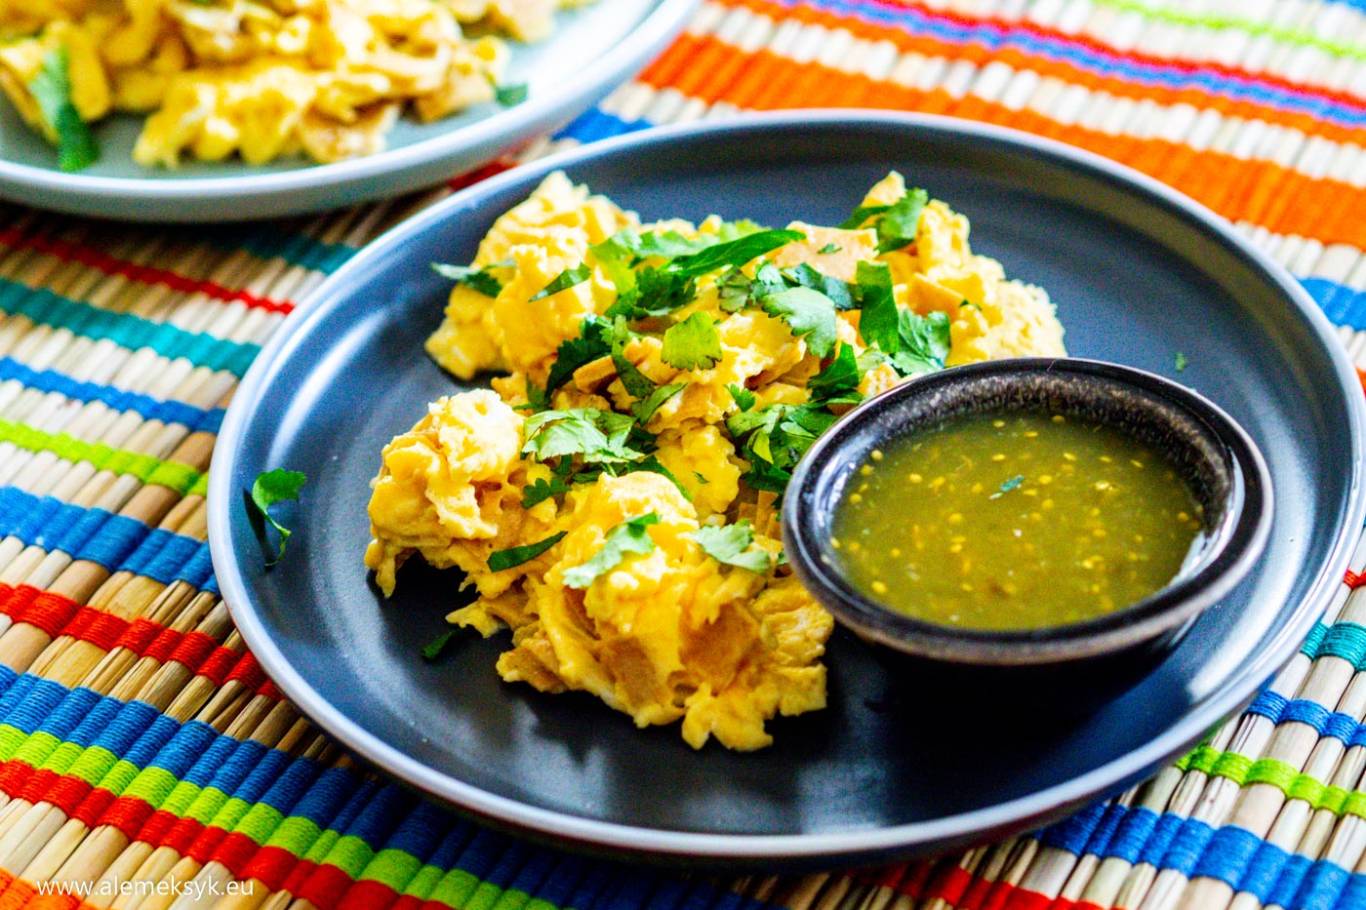 Huevos con tortilla - czyli meksykańska jajecznica z dodatkiem tortilli